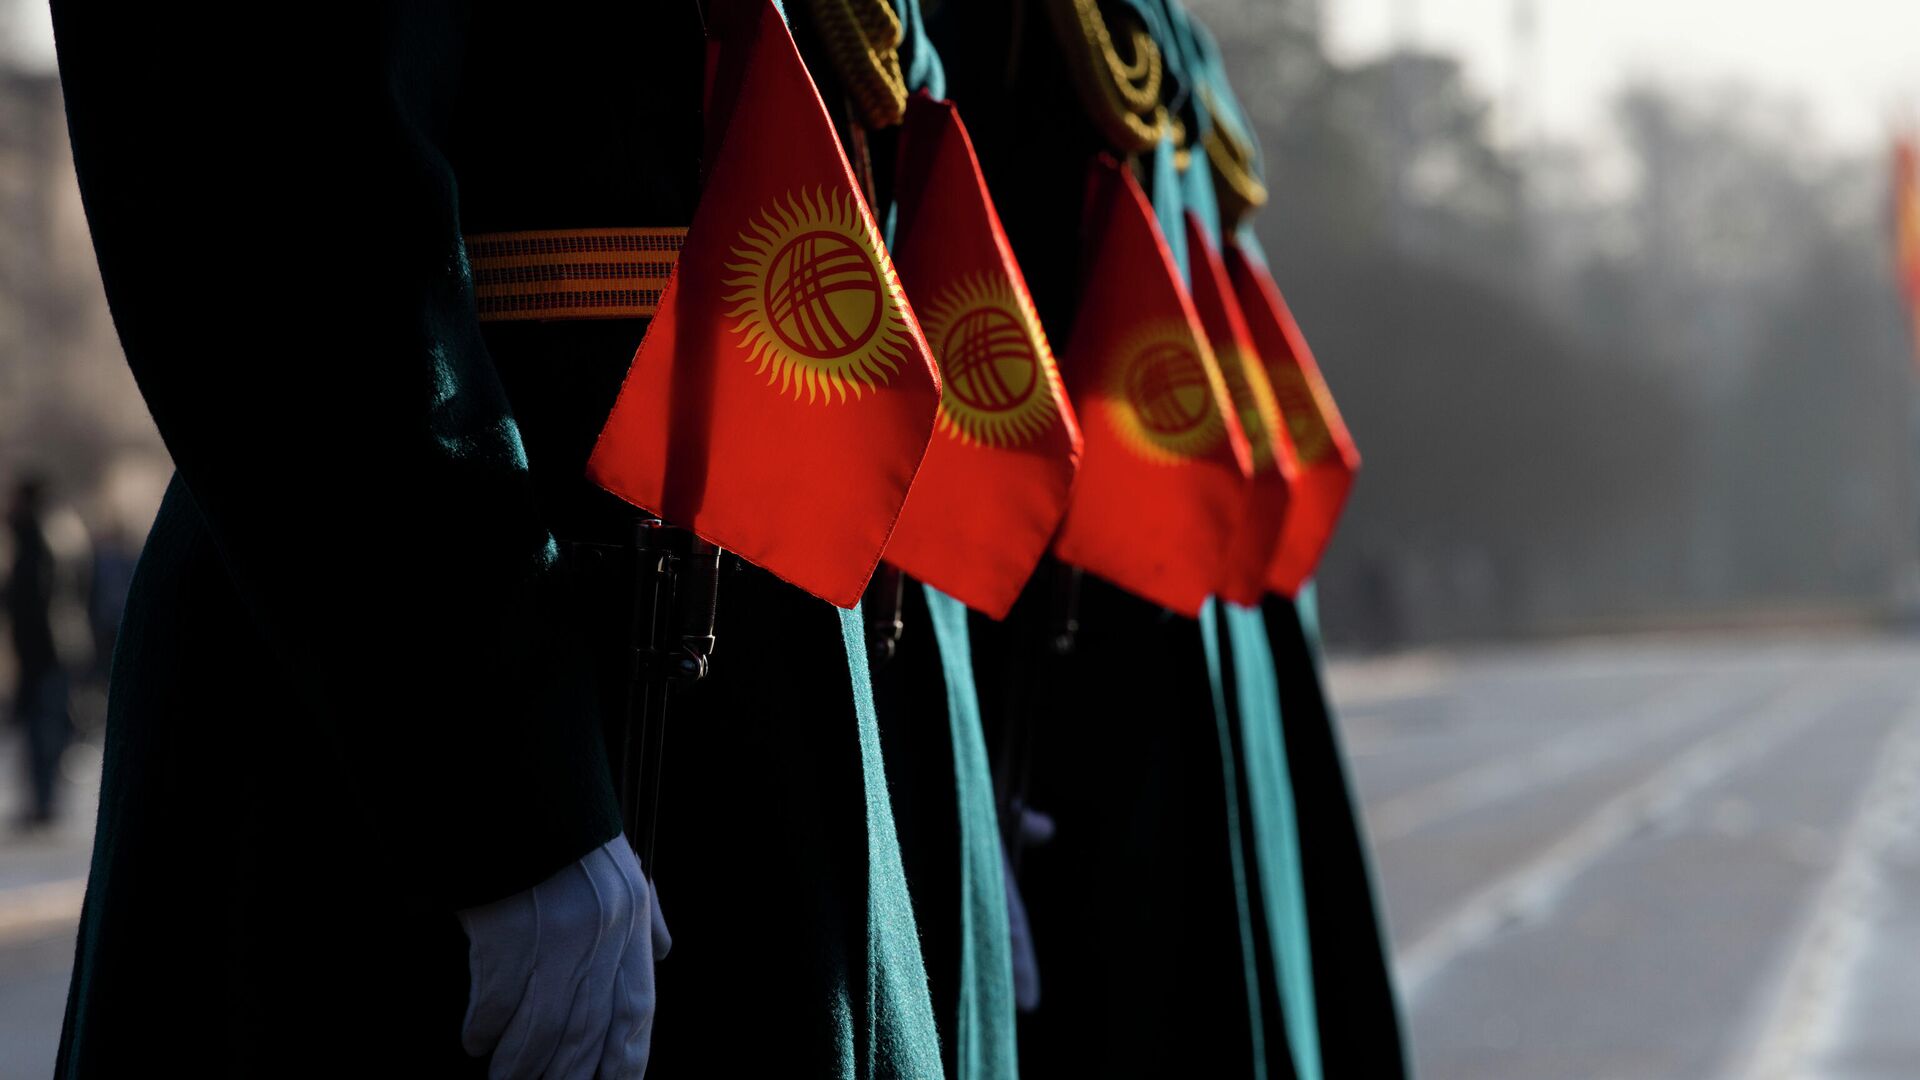 В Кыргызстане объявили траур по погибшим из-за конфликта на границе с Таджикистаном